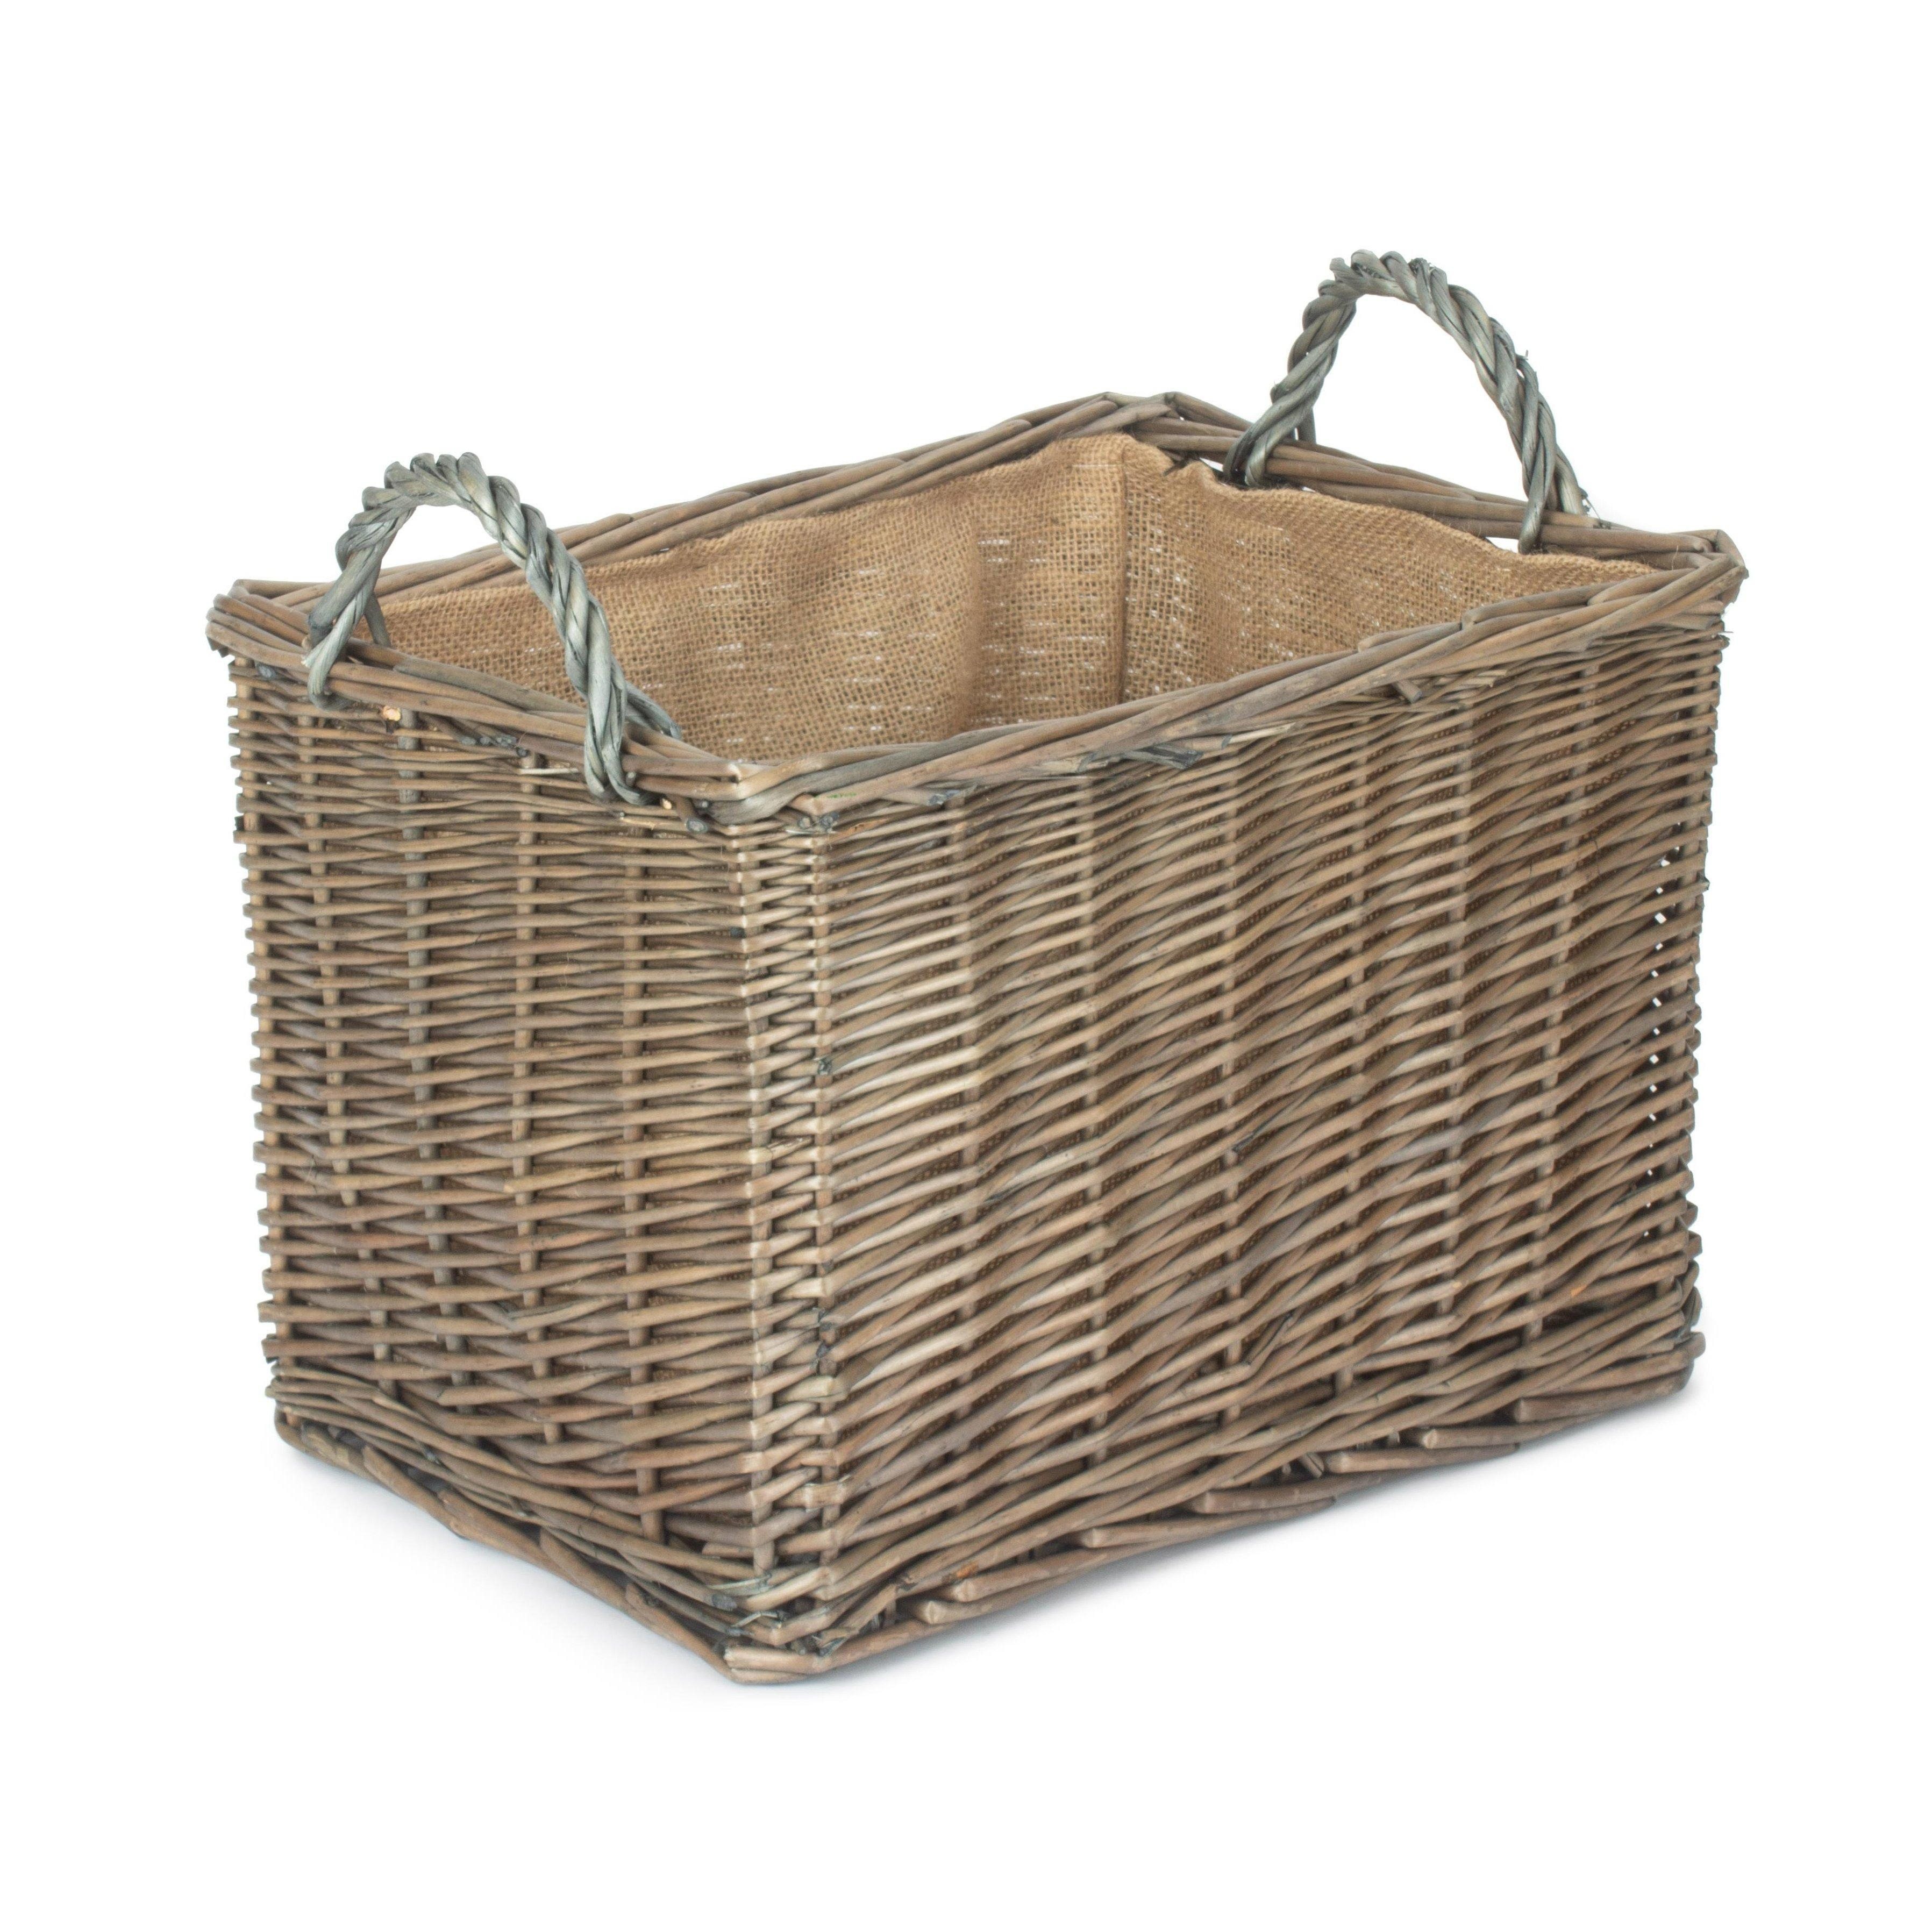 Wicker Kindling Wood Basket - image 1